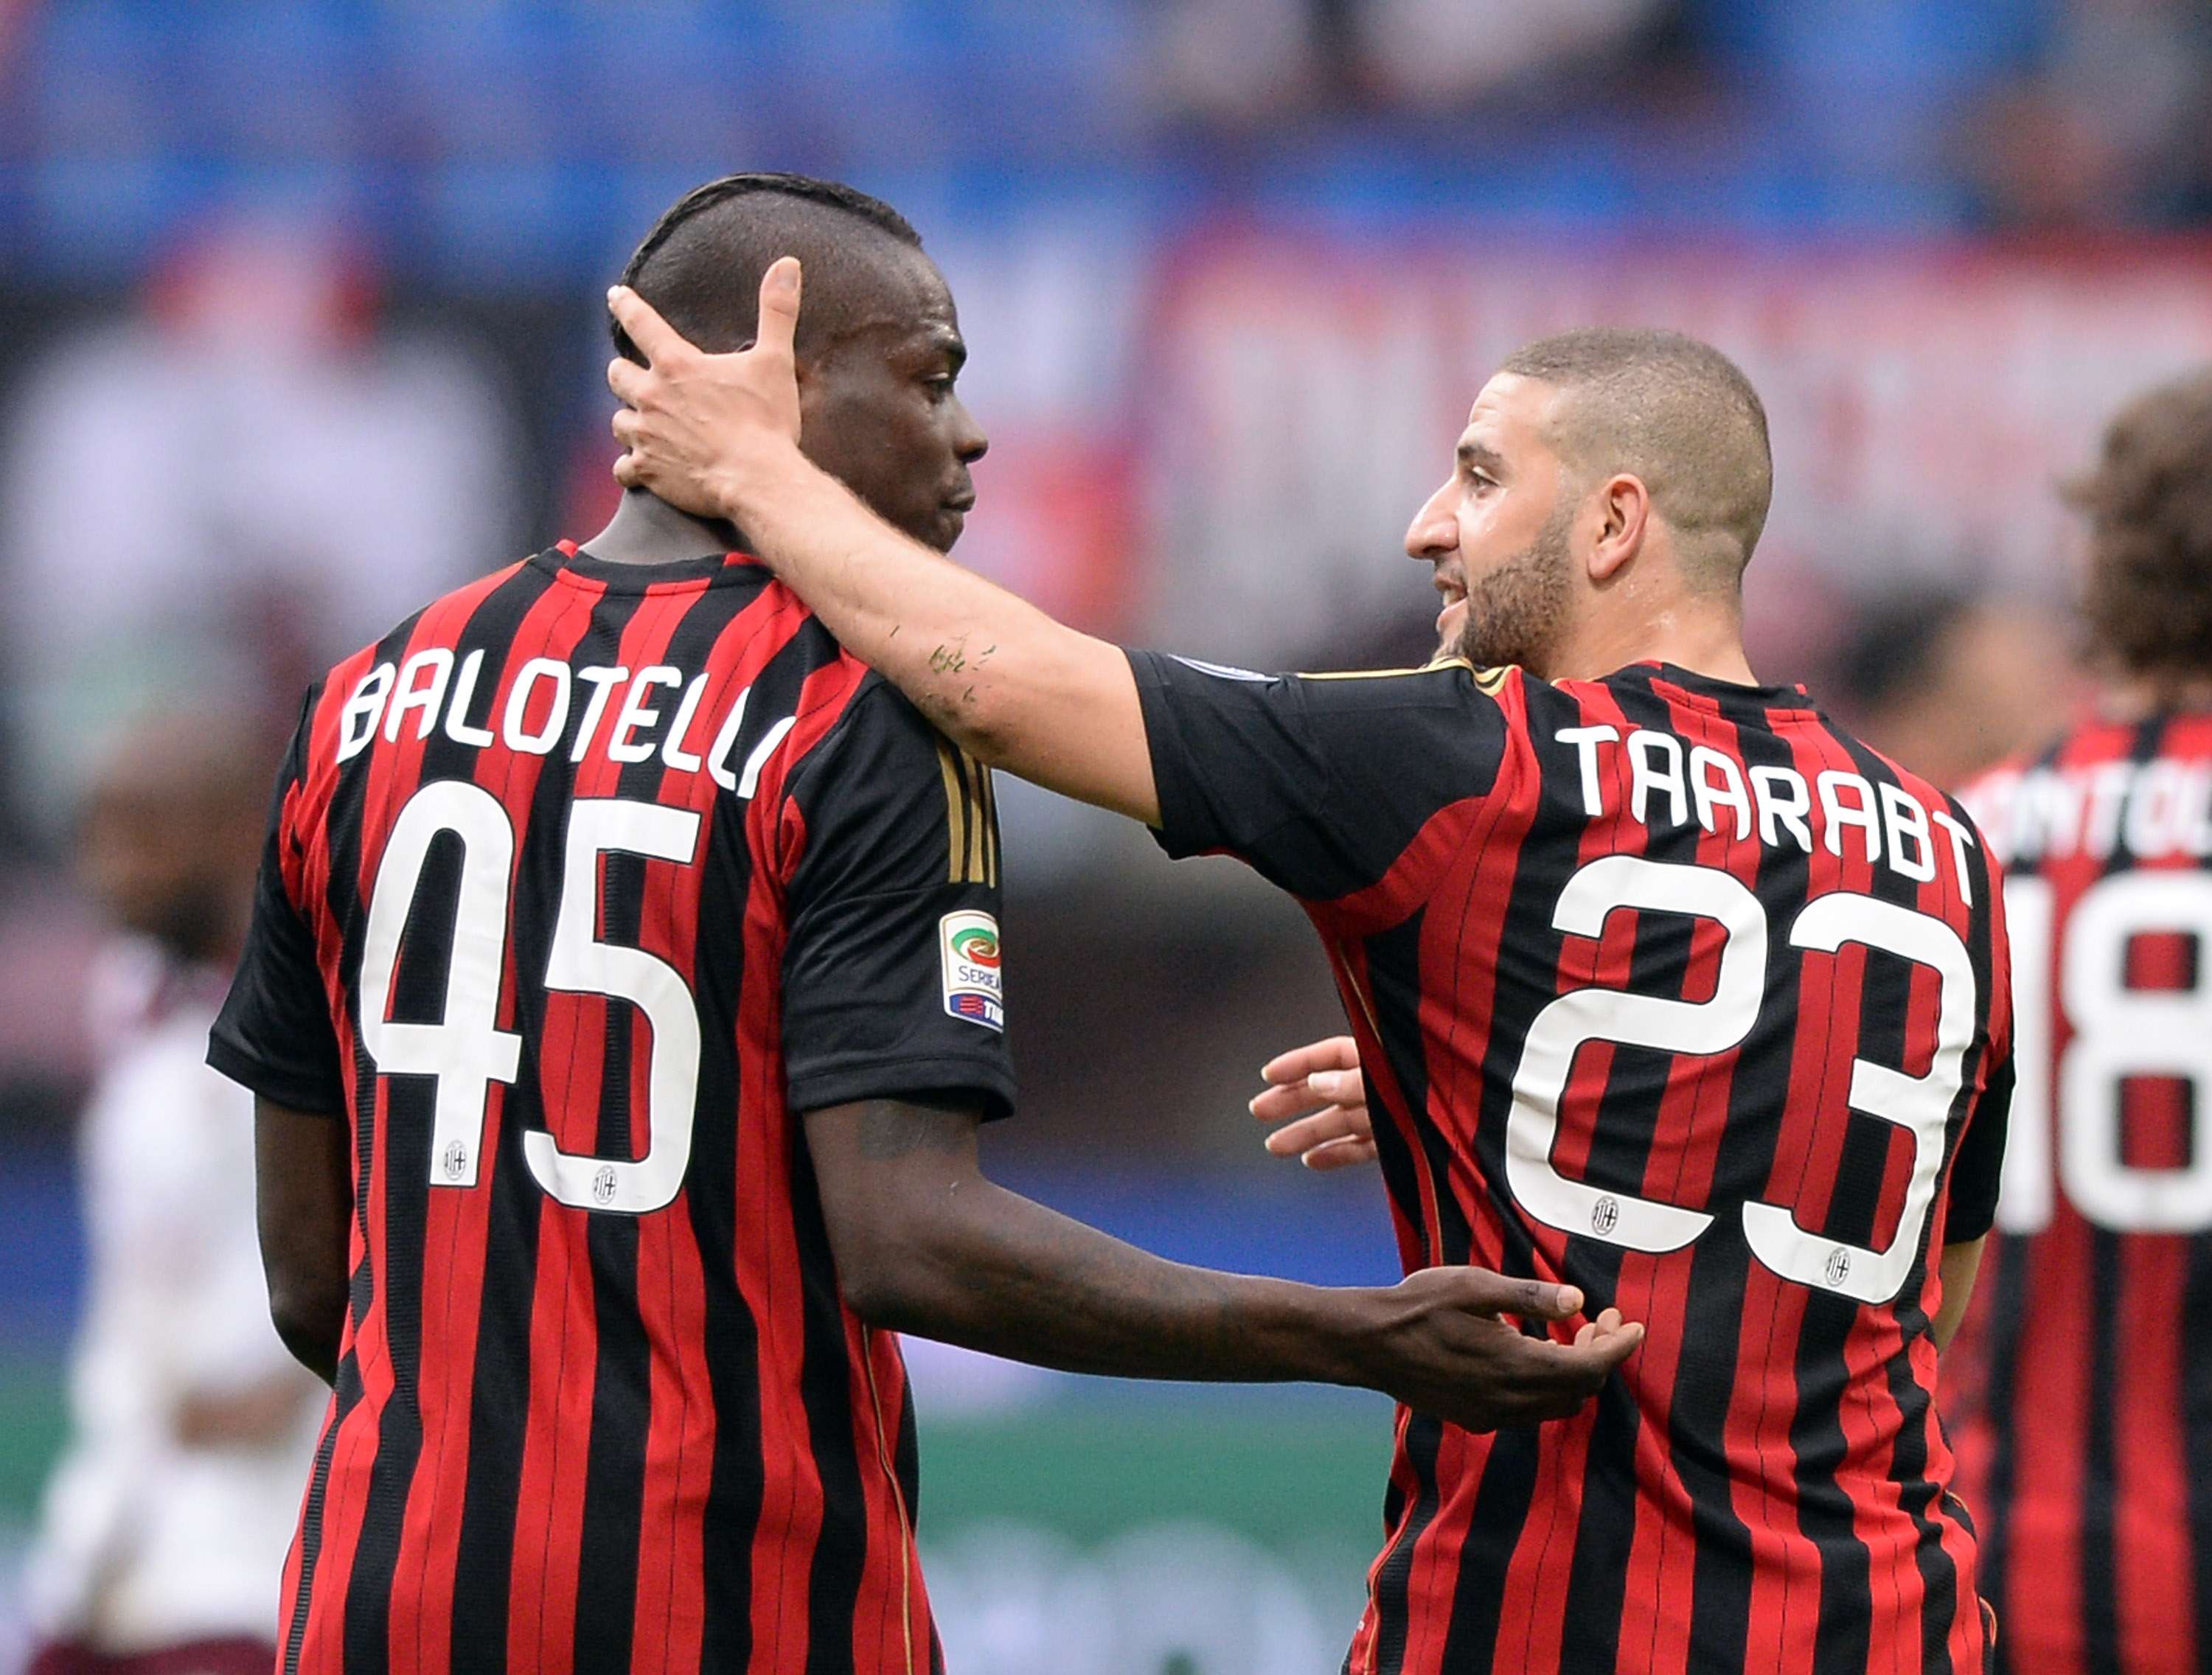 Milan's Mario Balotelli and Adel Taarabt celebrate